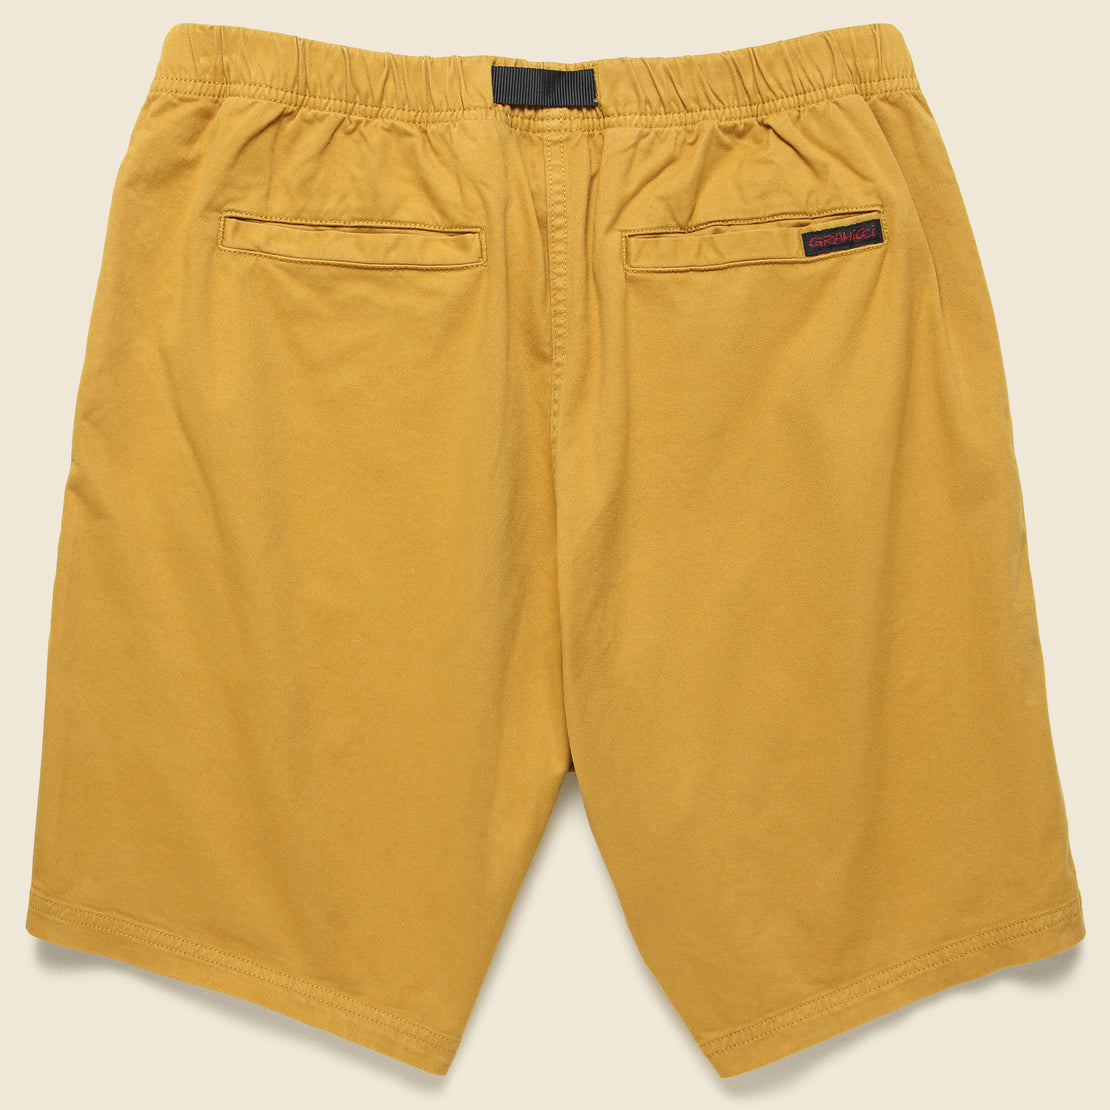 NN Shorts - Mustard - Gramicci - STAG Provisions - Shorts - Solid